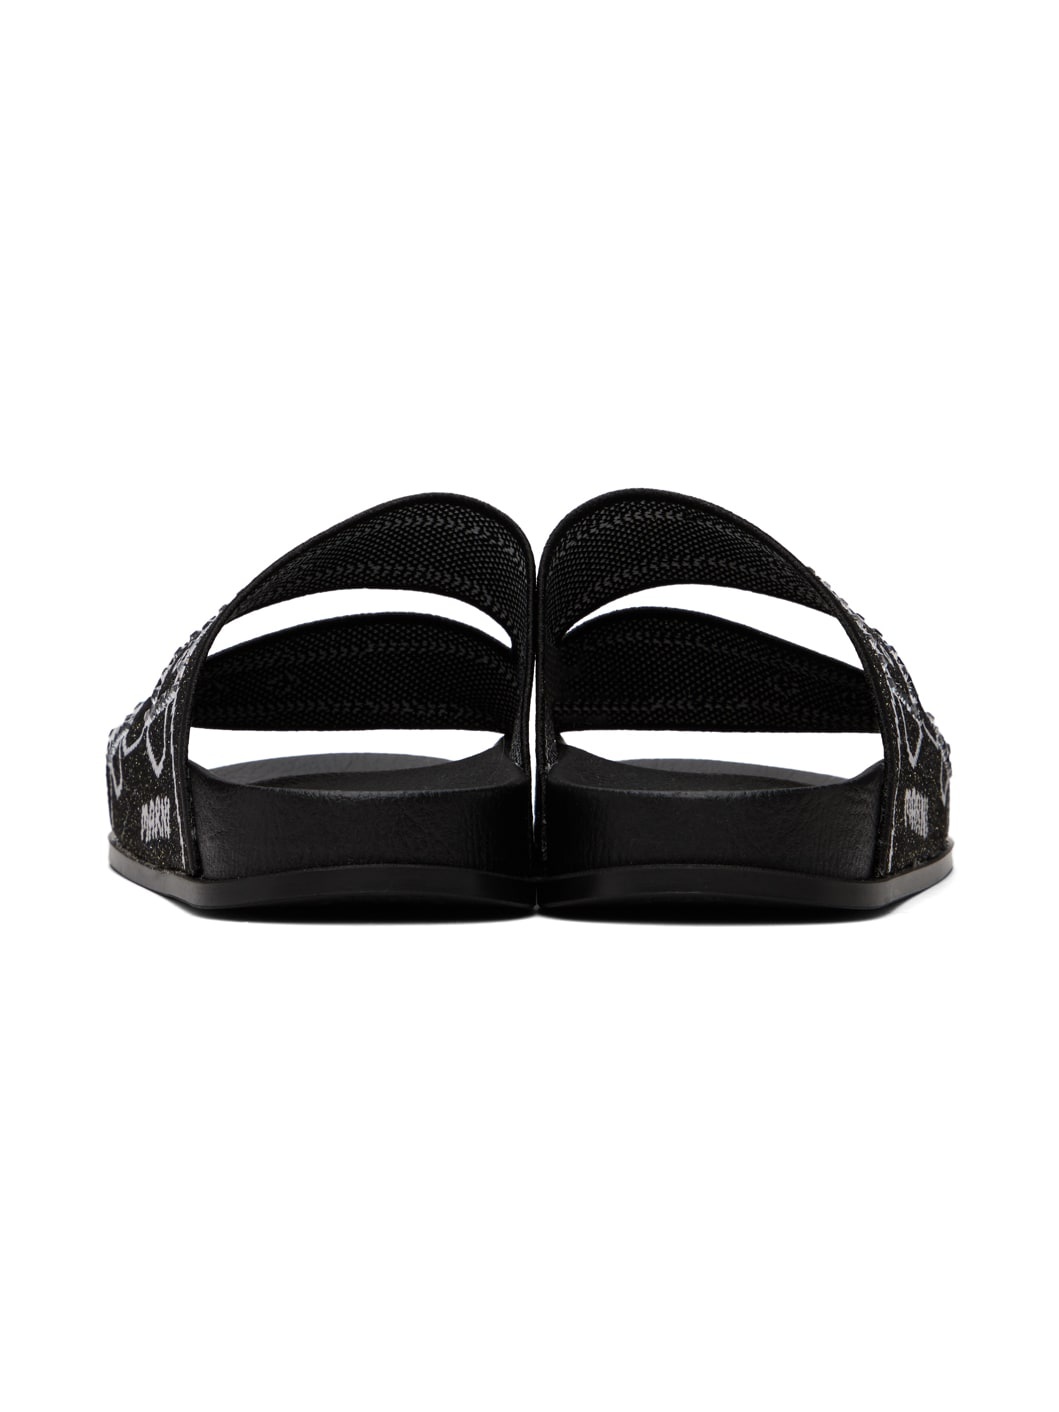 Black Jacquard Sandals - 2